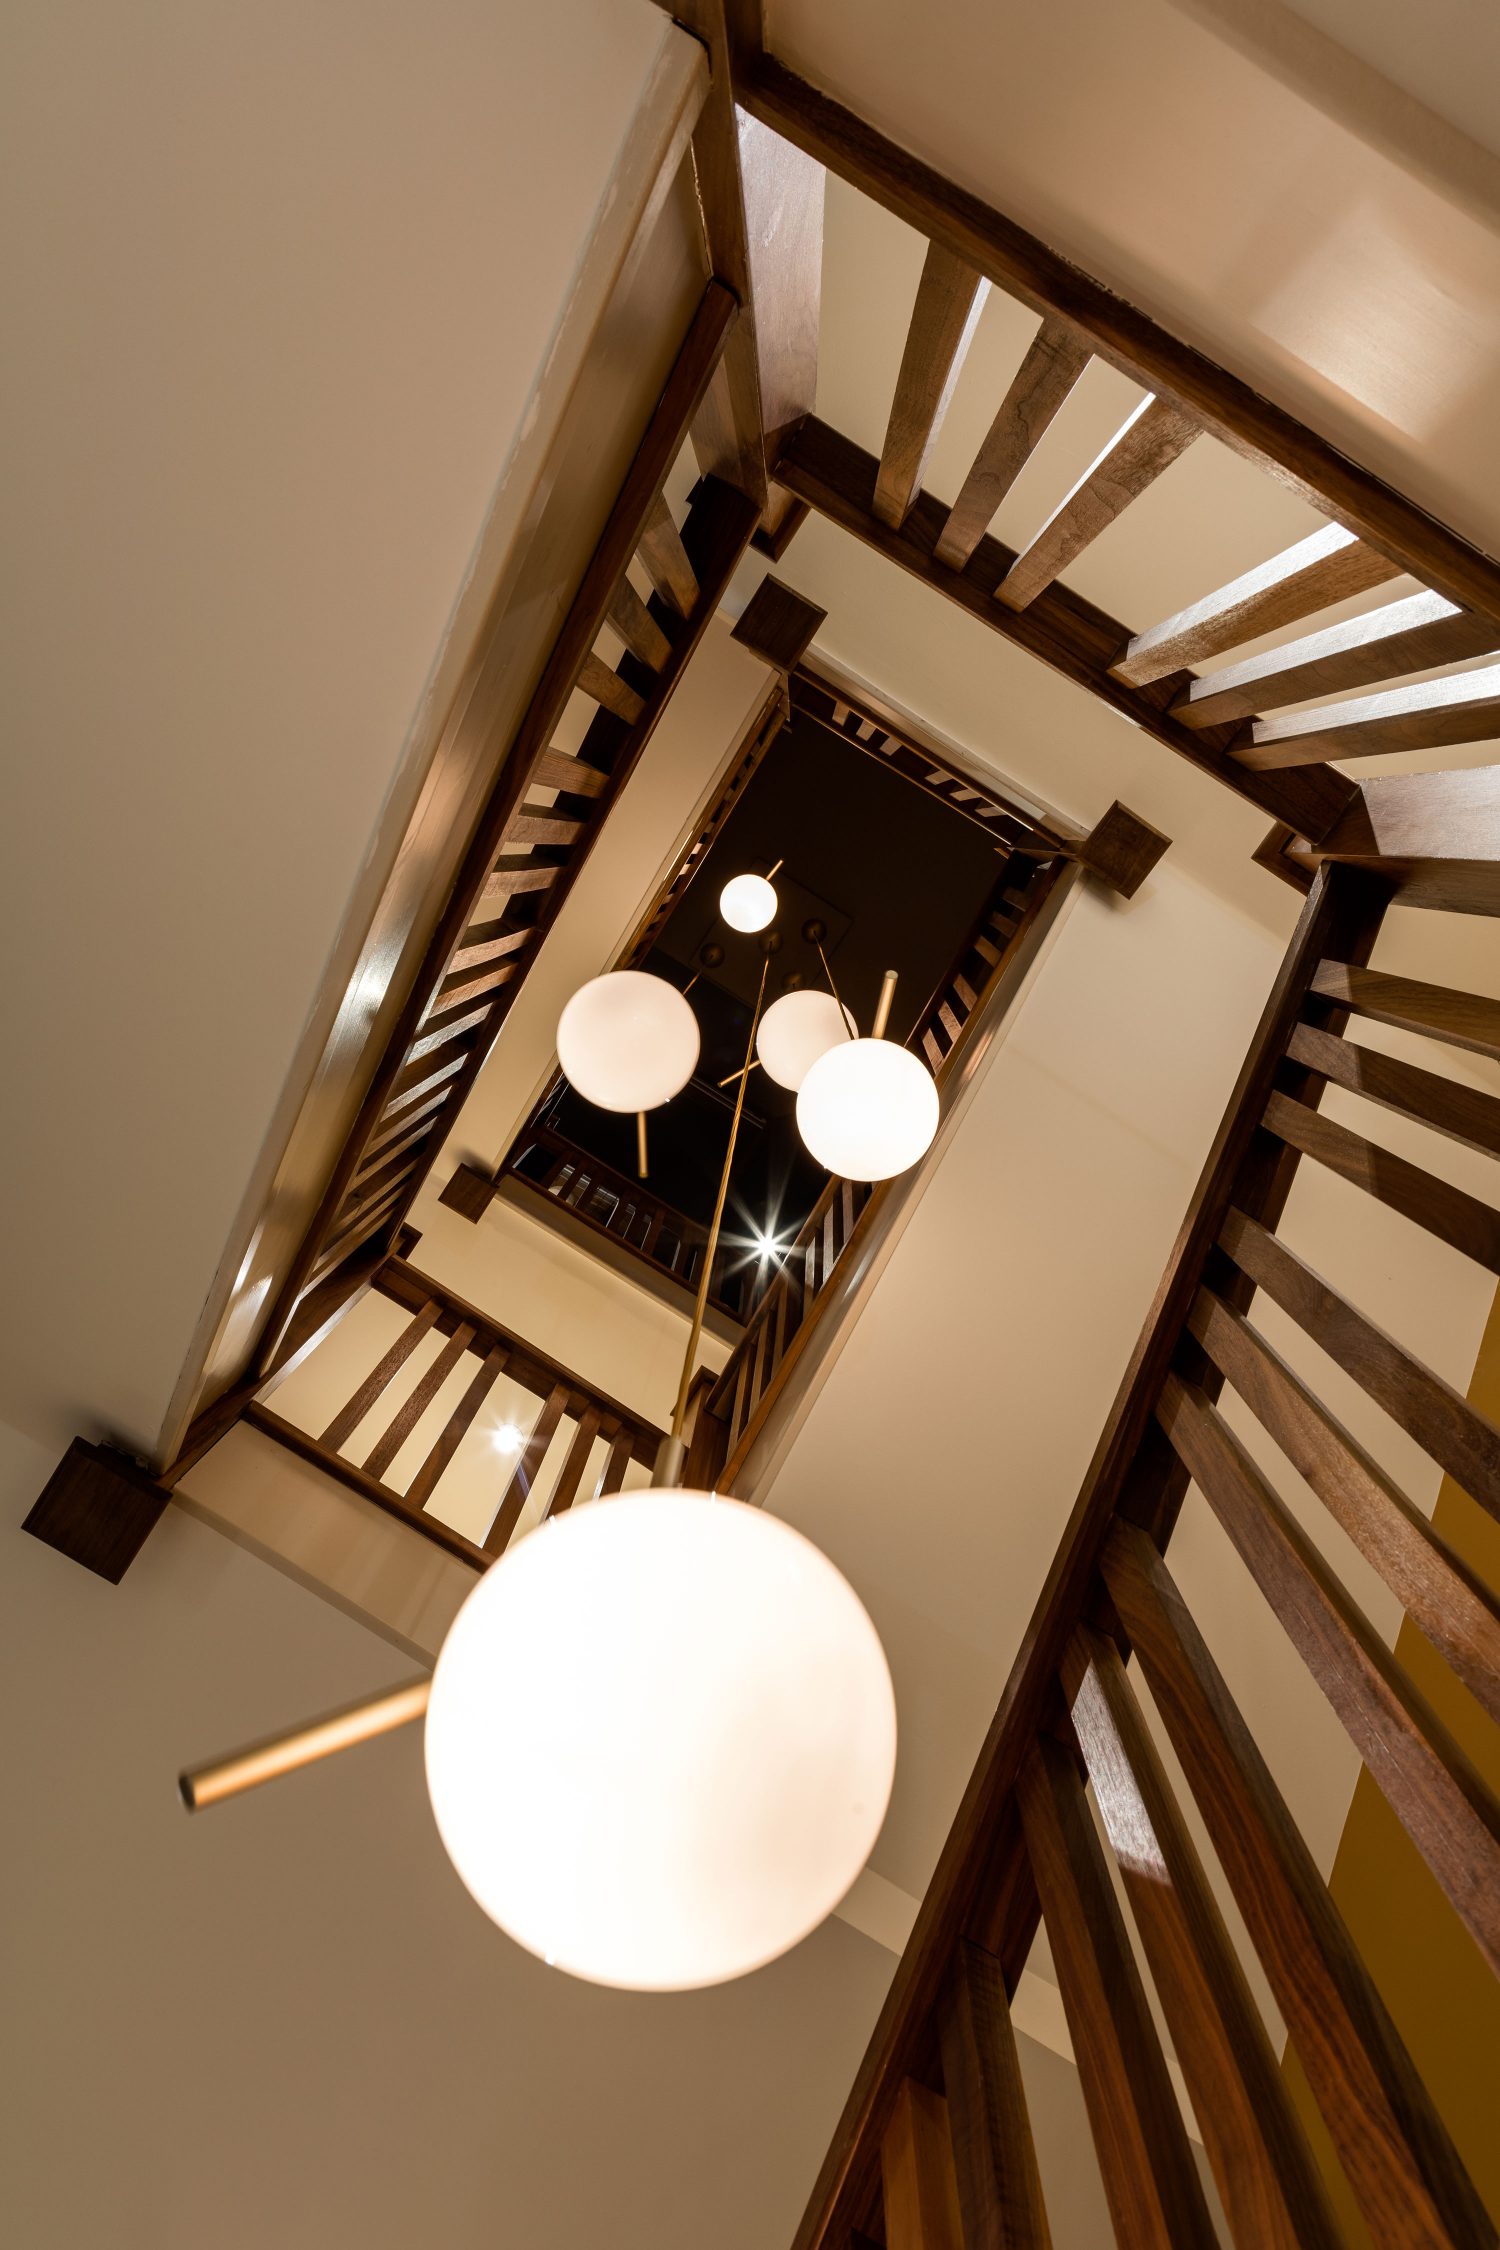 Mellow Yellow Islington interior design project, Daniel Hopwood. Winding staircase